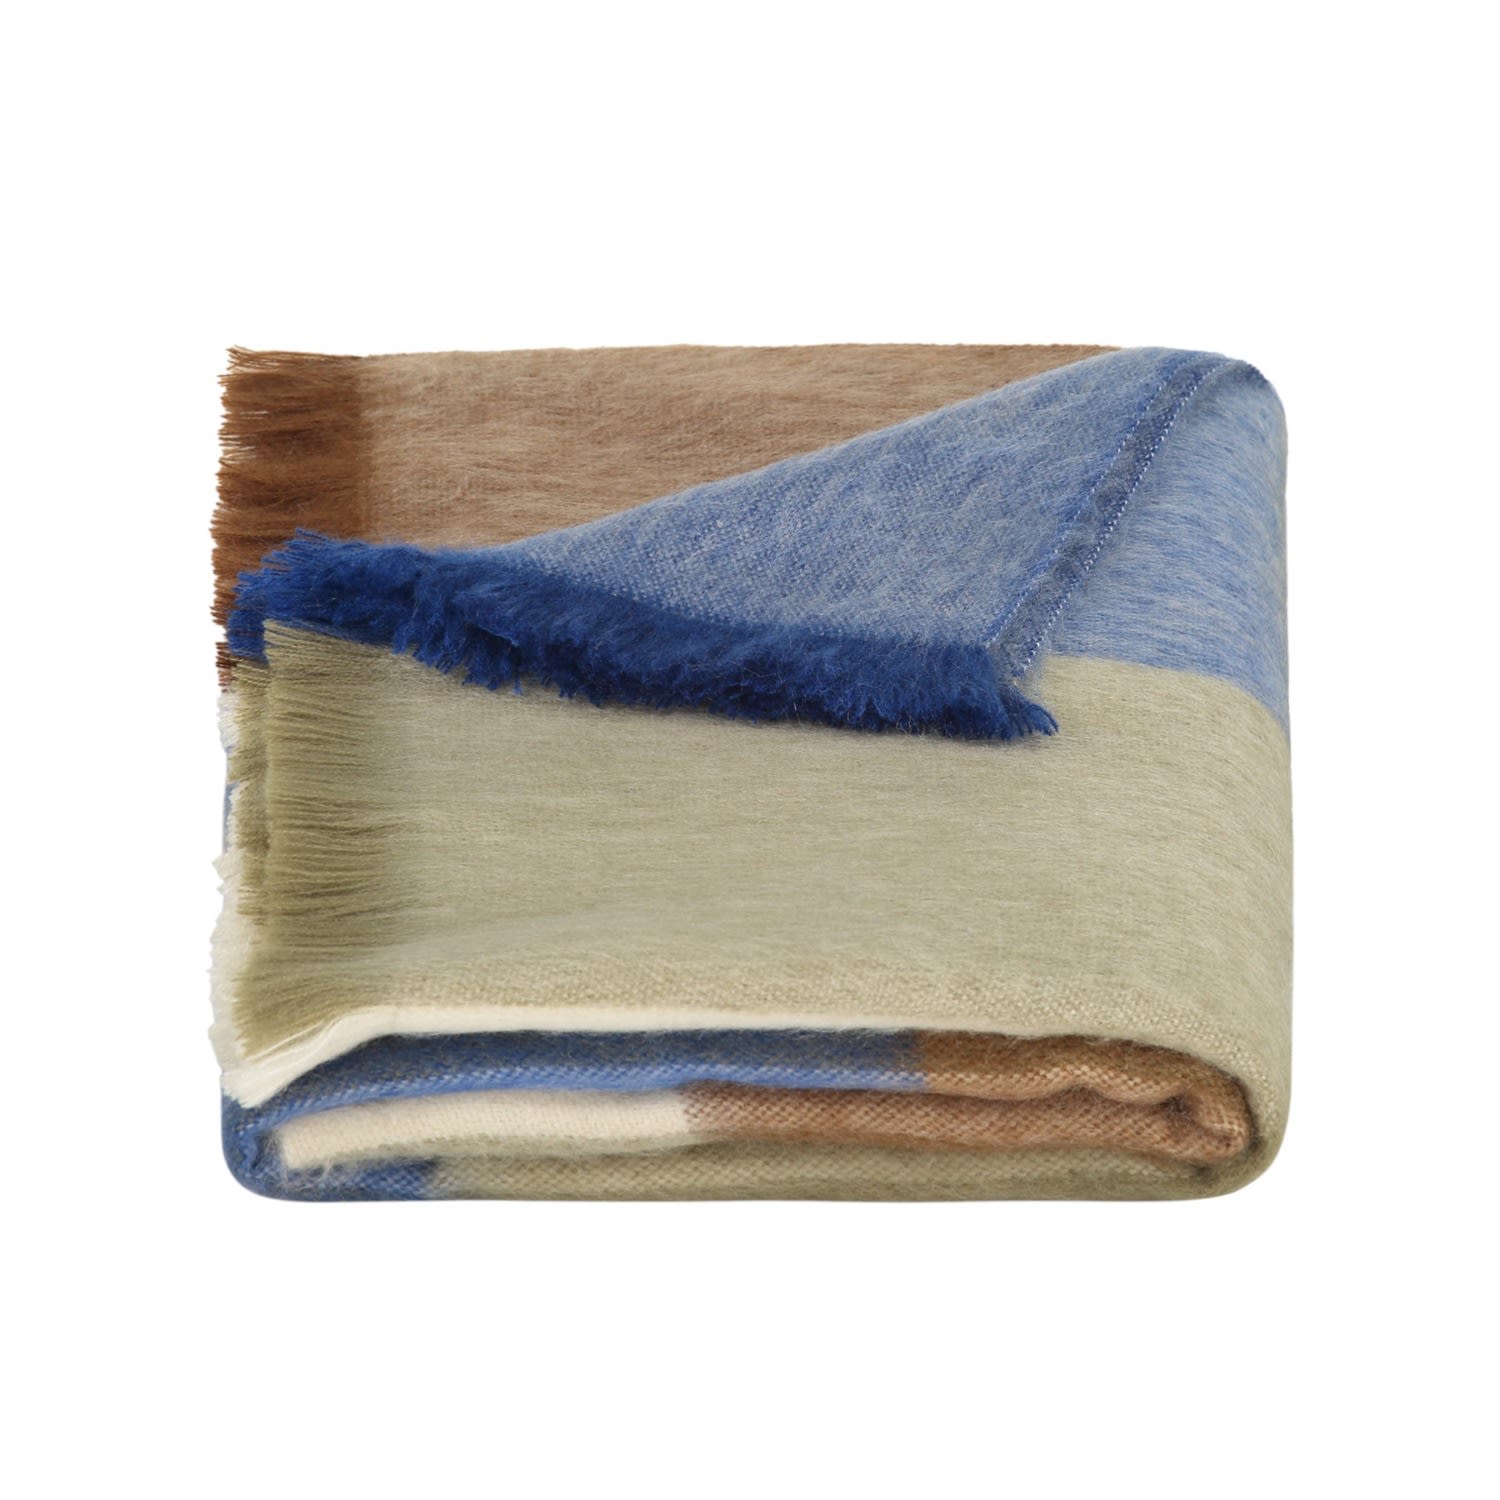 Alpaca Loca Women's Neutrals / Blue Scarf/shawl Blocked Cobalt Blue/naturals Alpaca Wool In Multi